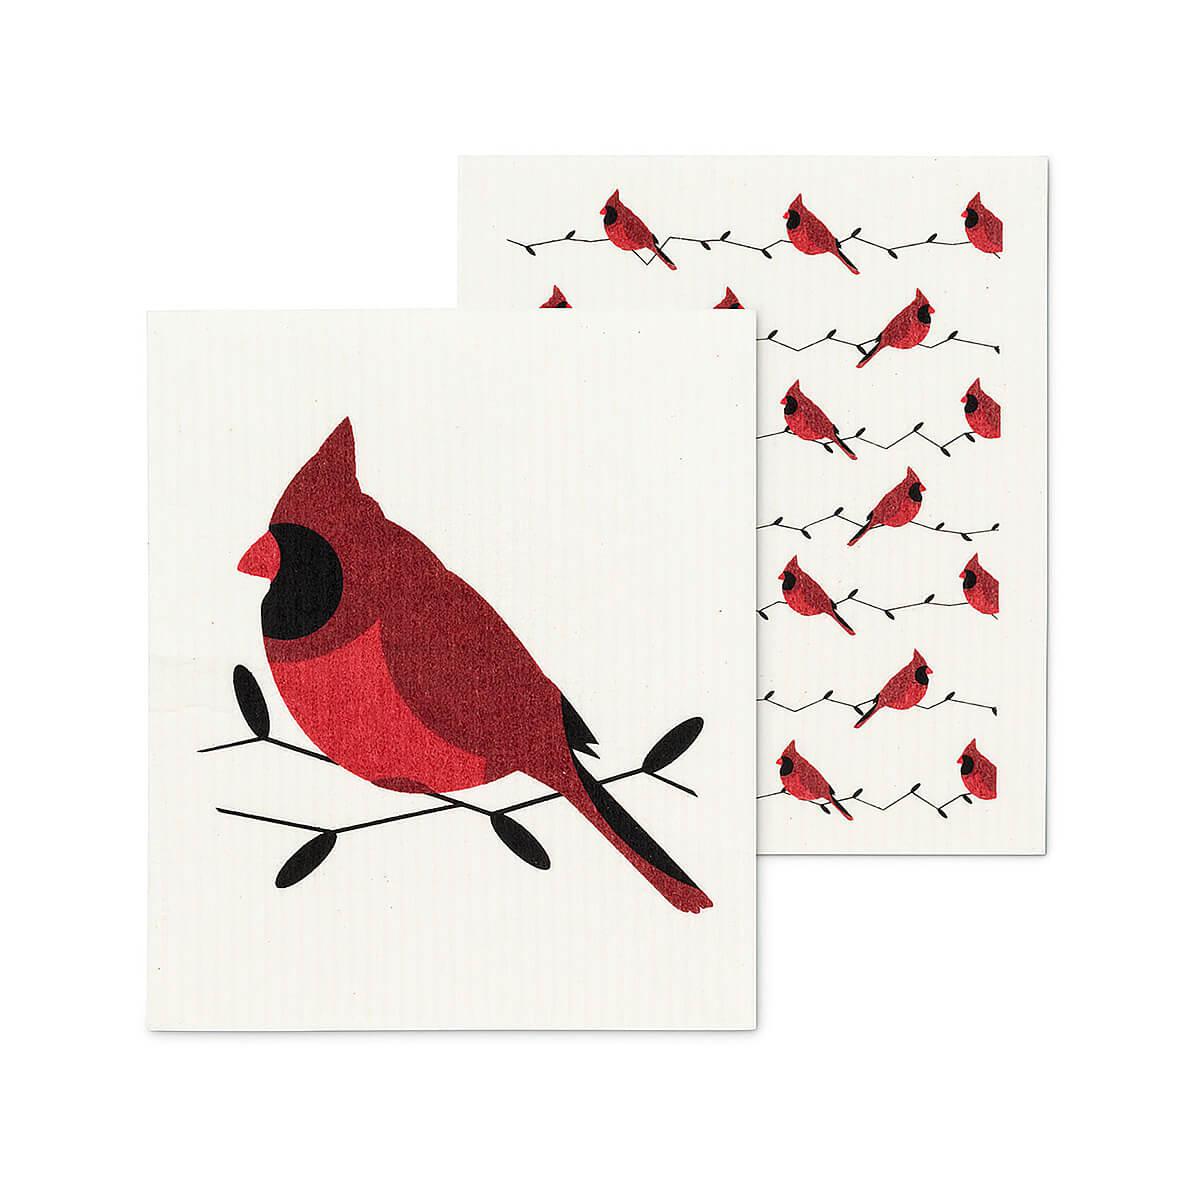  Cardinal Dishcloths - 2 Pack